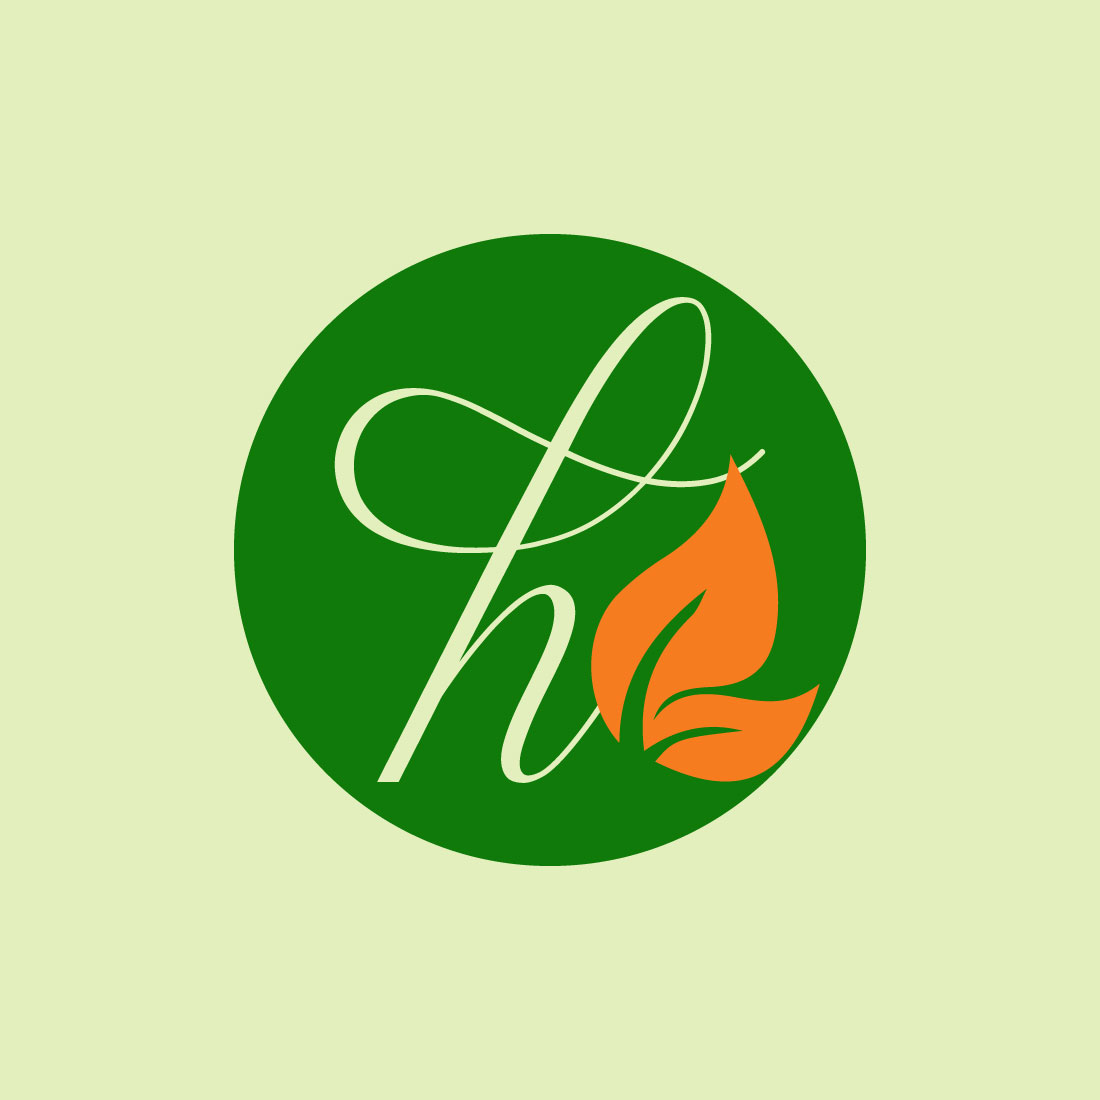 Free h letter logo cover image.